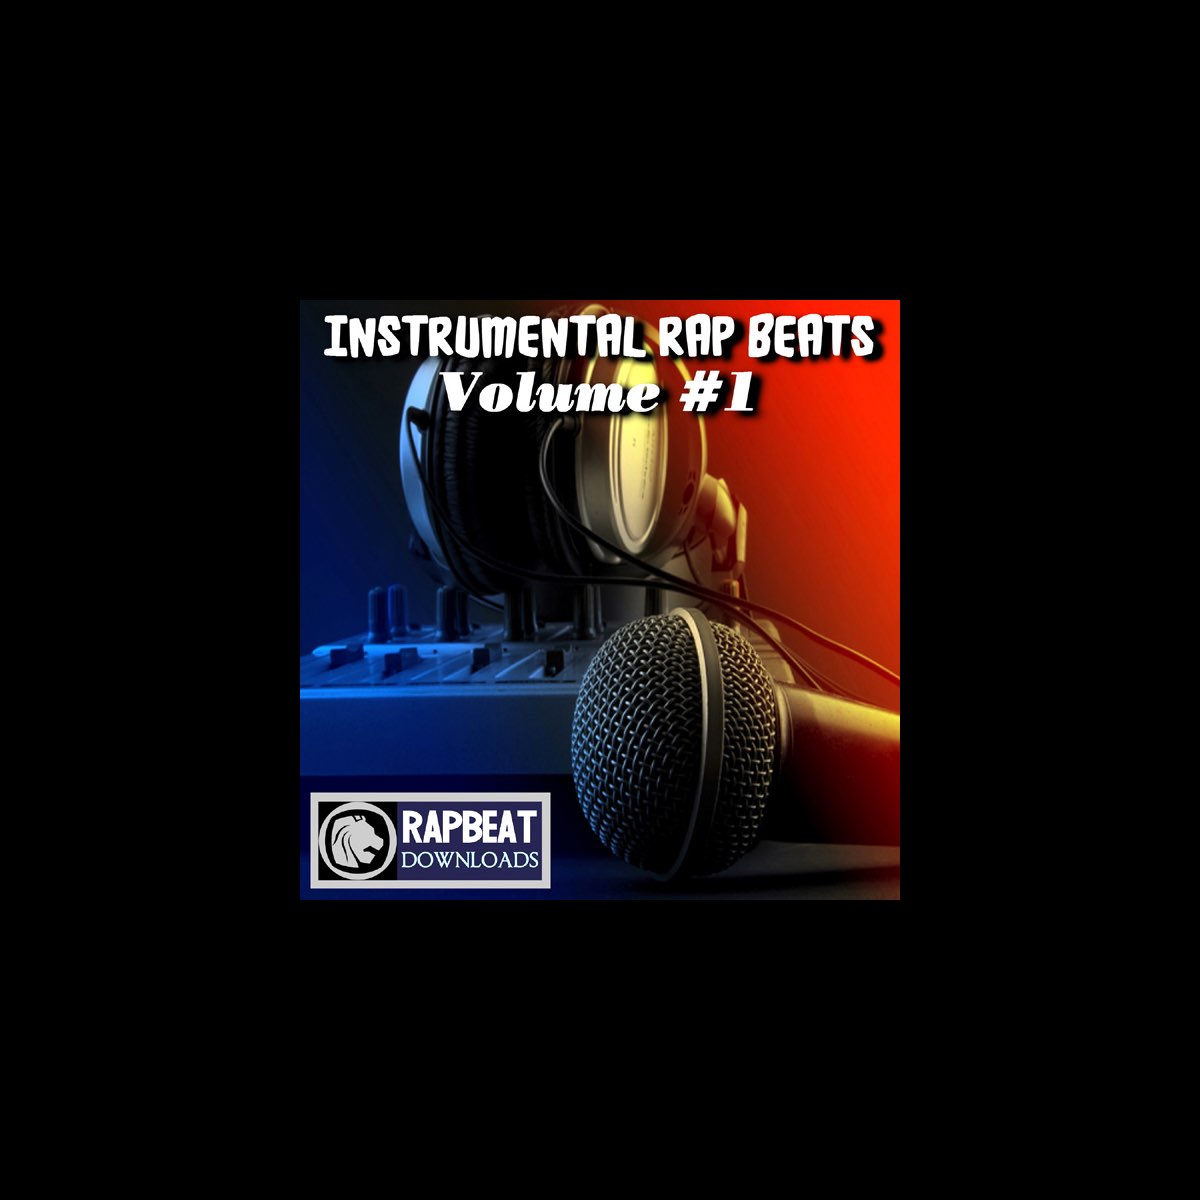 Instrumental Rap Beats - Volume #1 by RapBeat Downloads on Apple Music